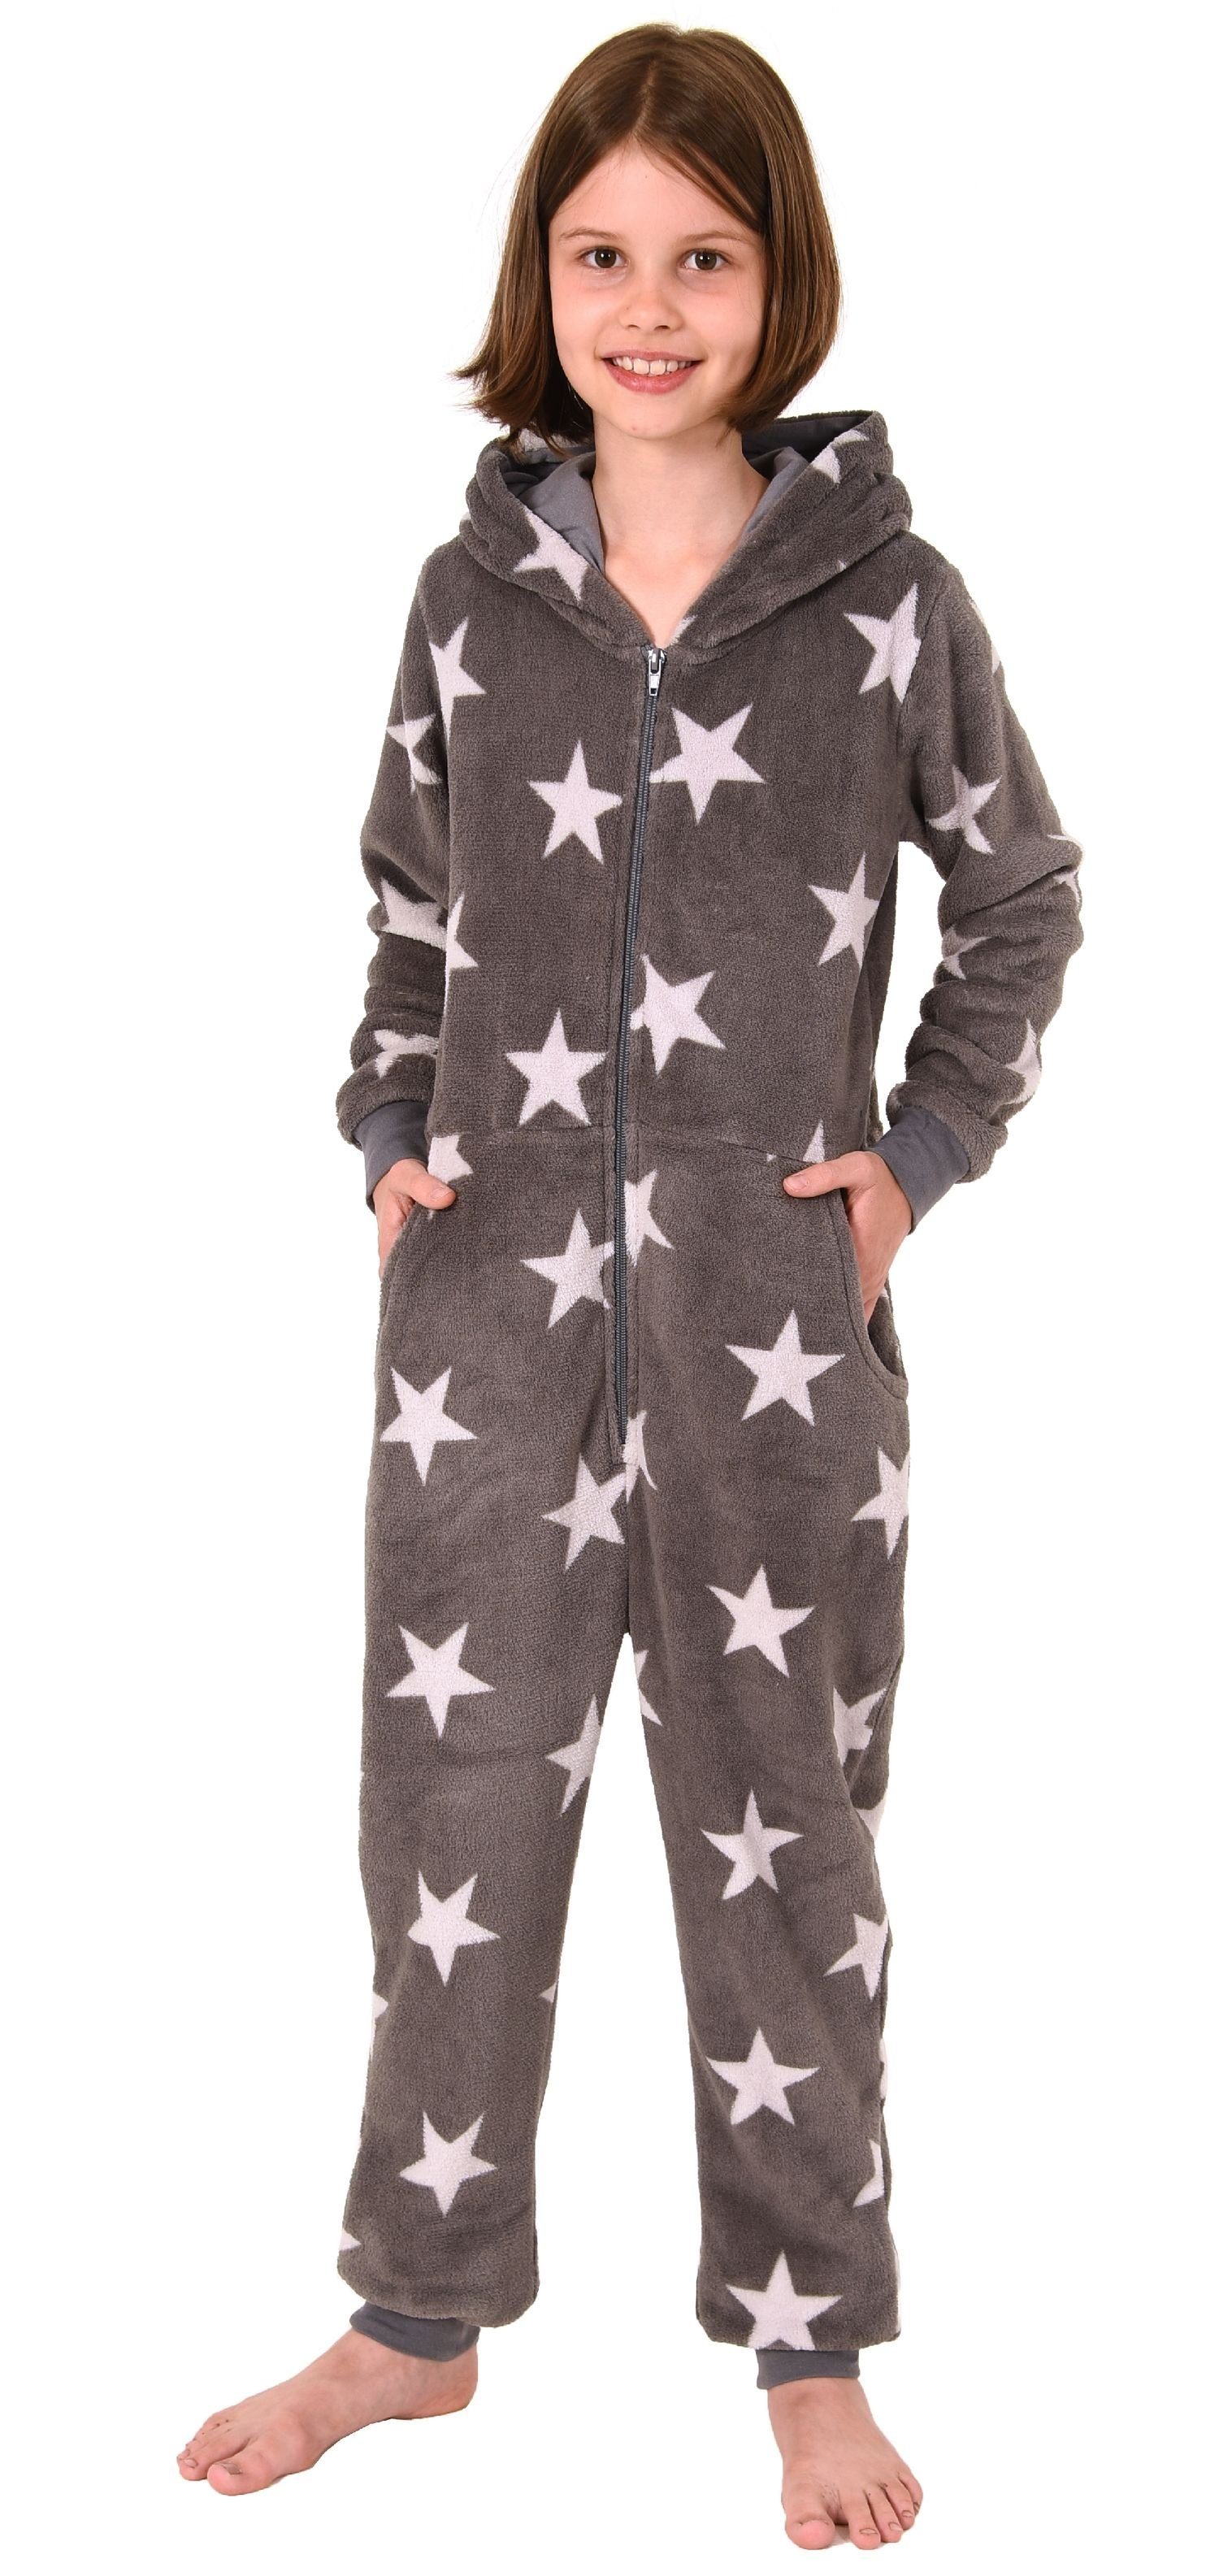 Normann Pyjama Mädchen Jumpsuit Overall Schlafanzug langarm Sternenmotiv